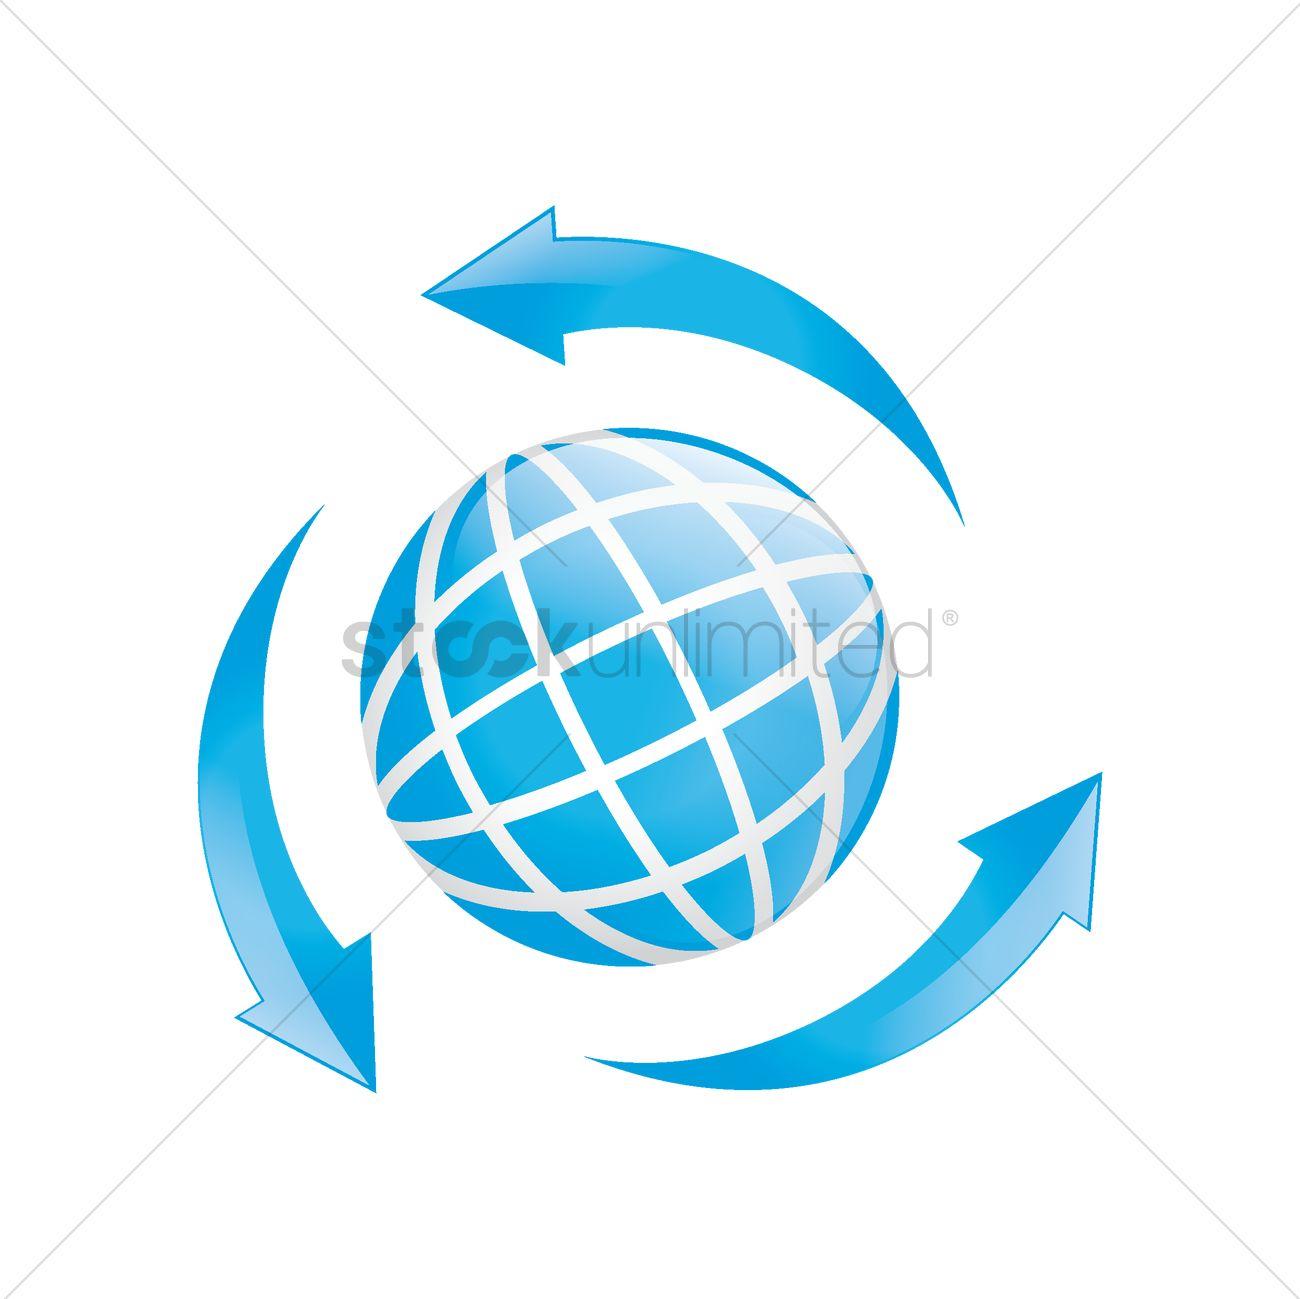 Spherical Logo - Spherical logo element design Vector Image - 2004265 | StockUnlimited